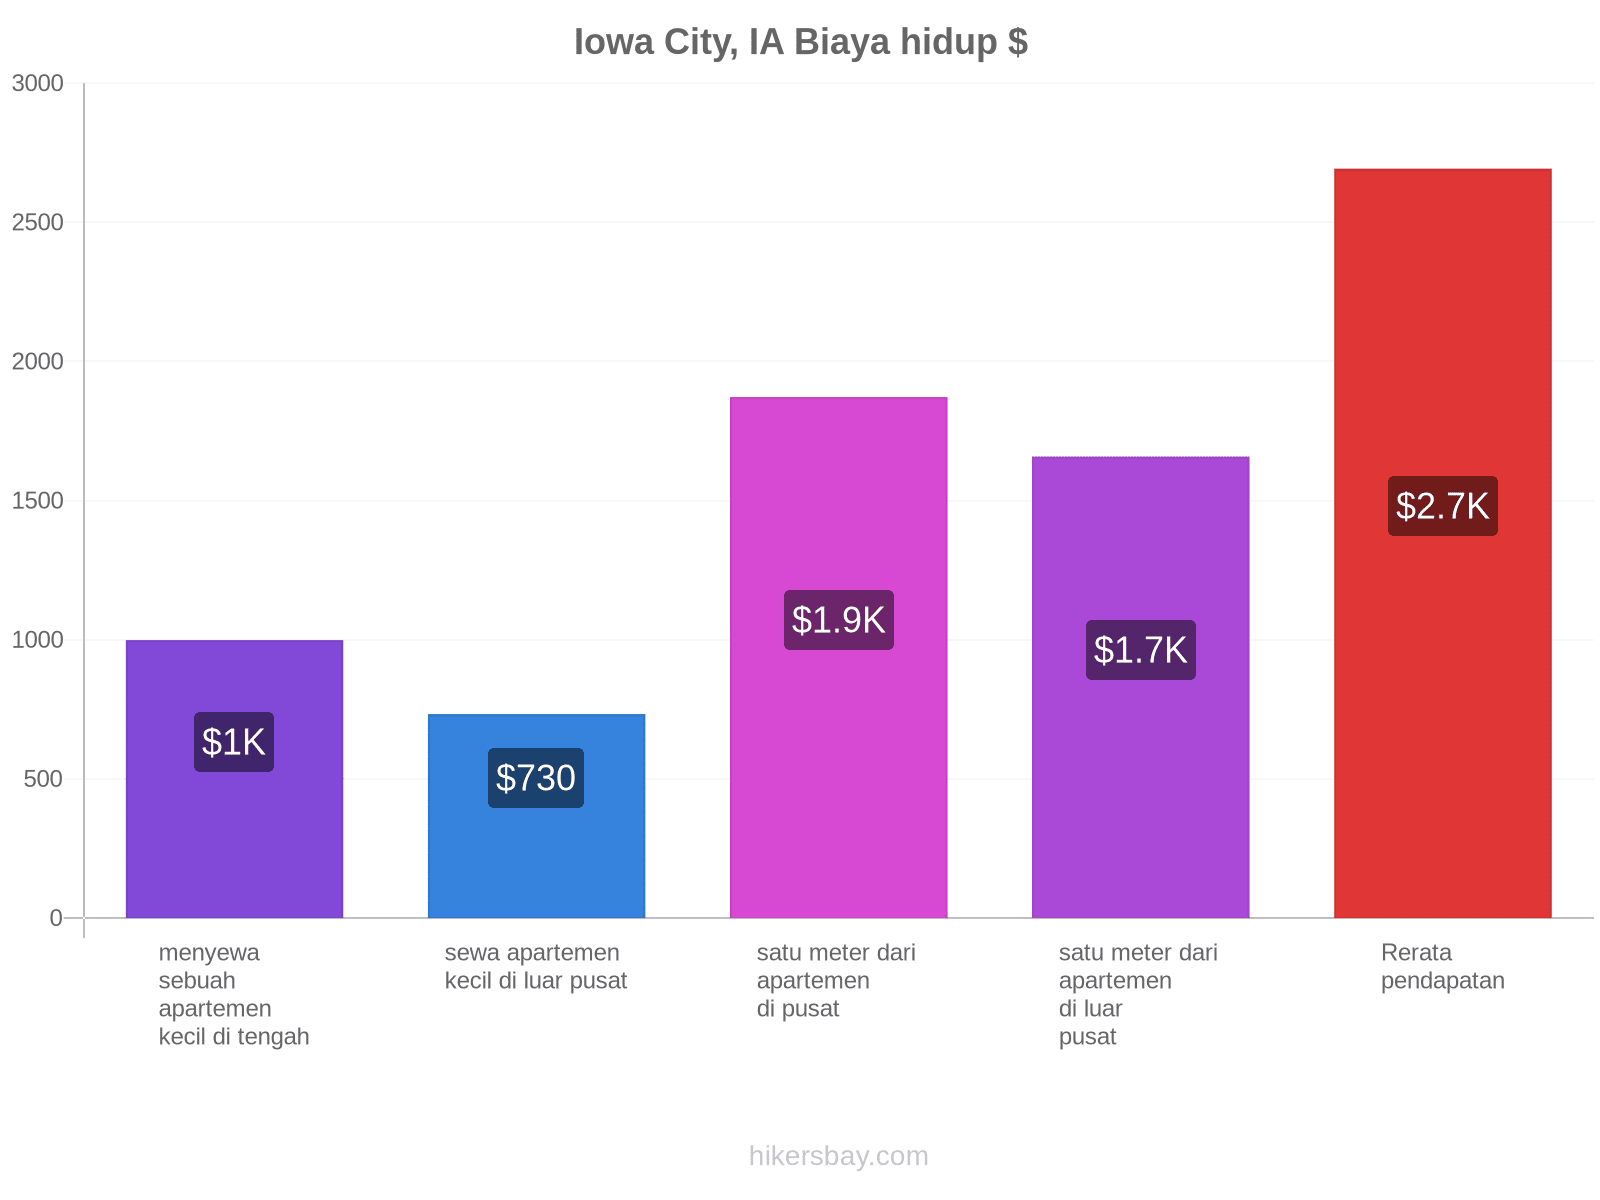 Iowa City, IA biaya hidup hikersbay.com